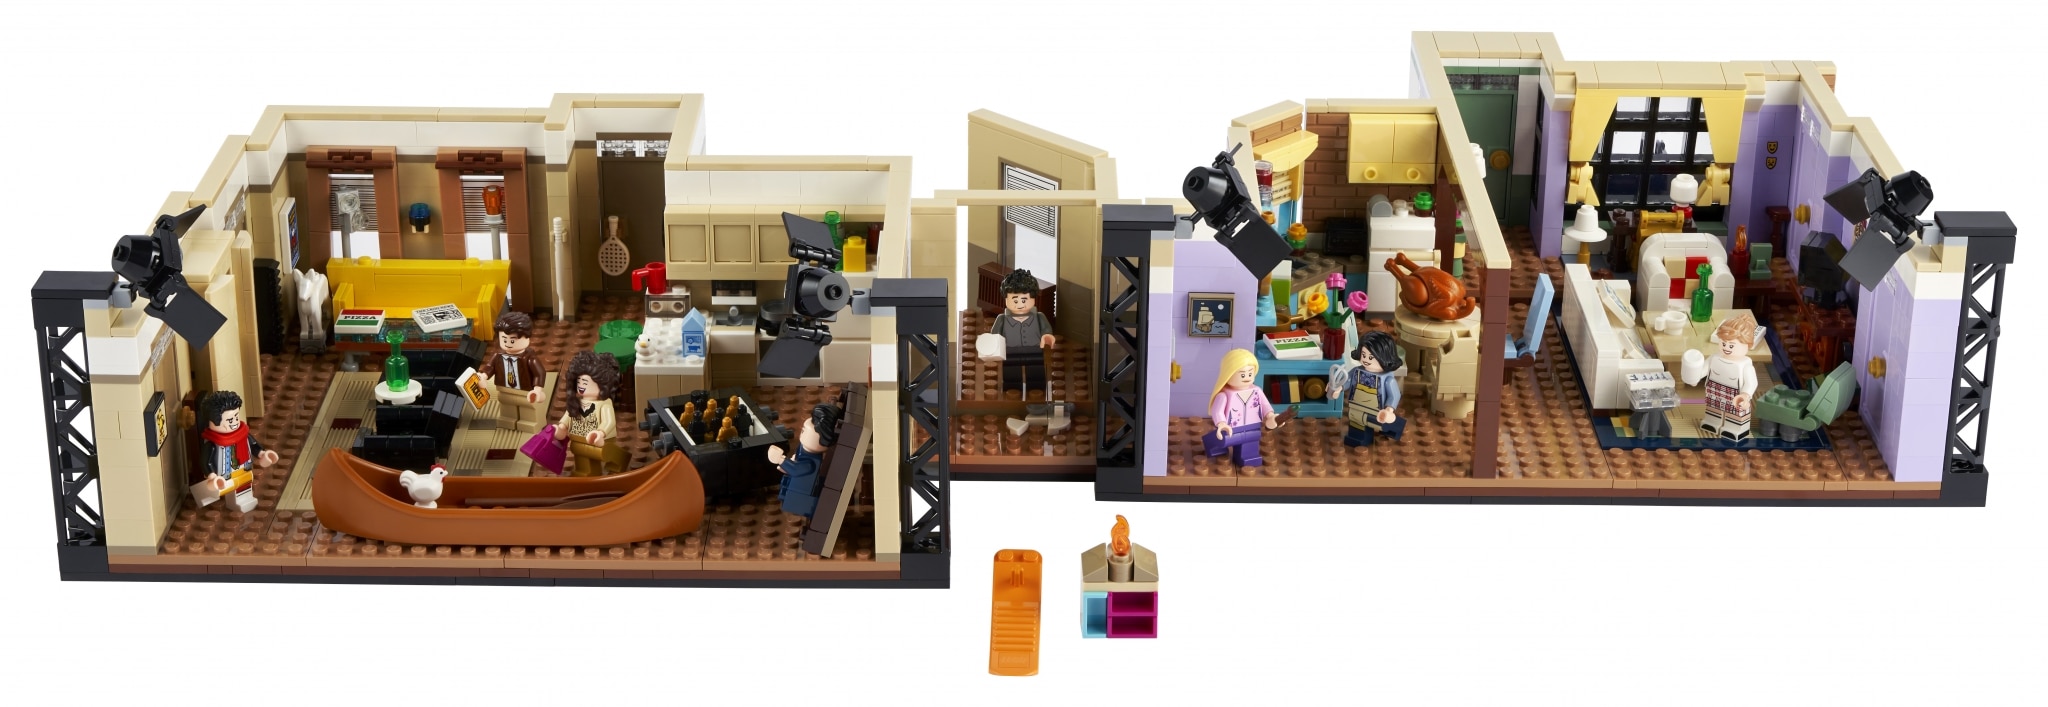 Friends TV Show LEGO Set